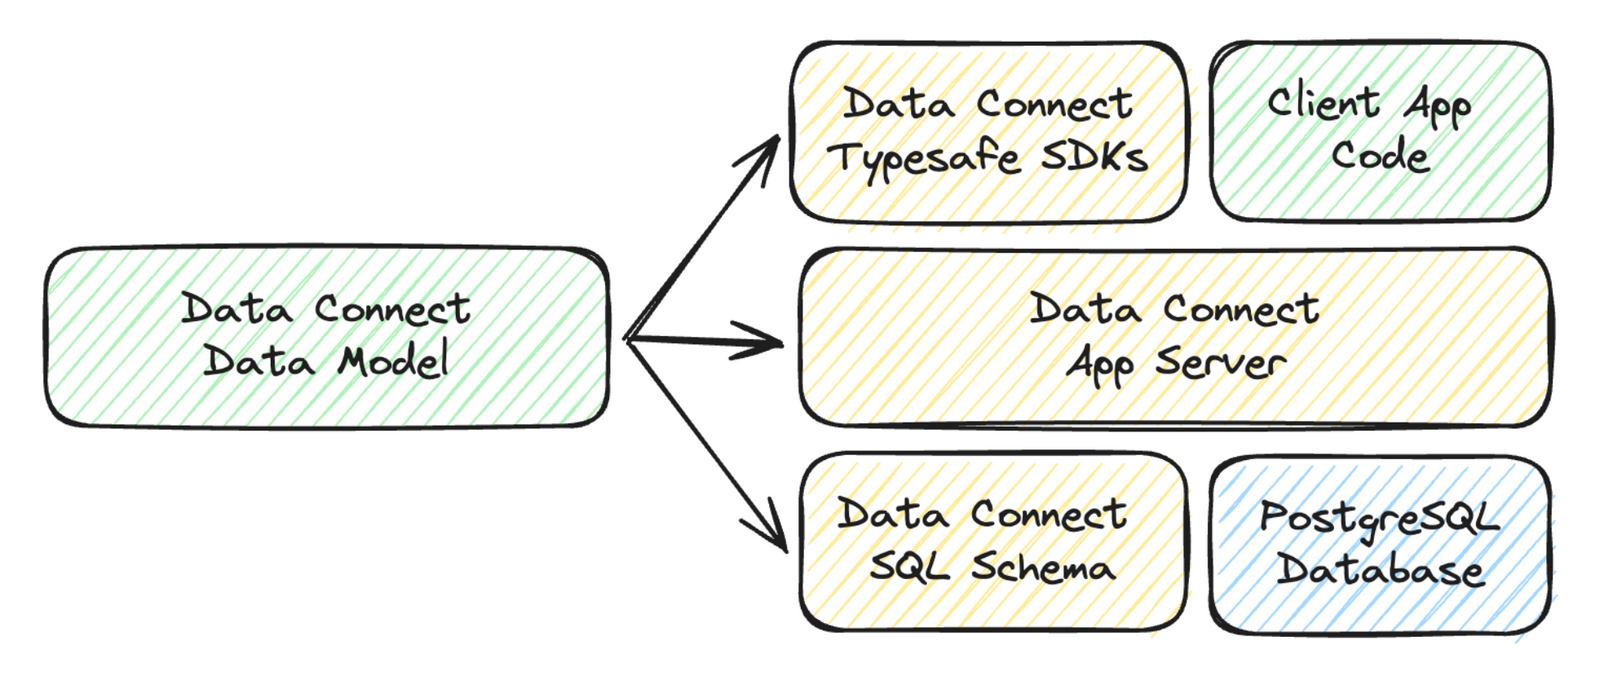 Data Connect data model